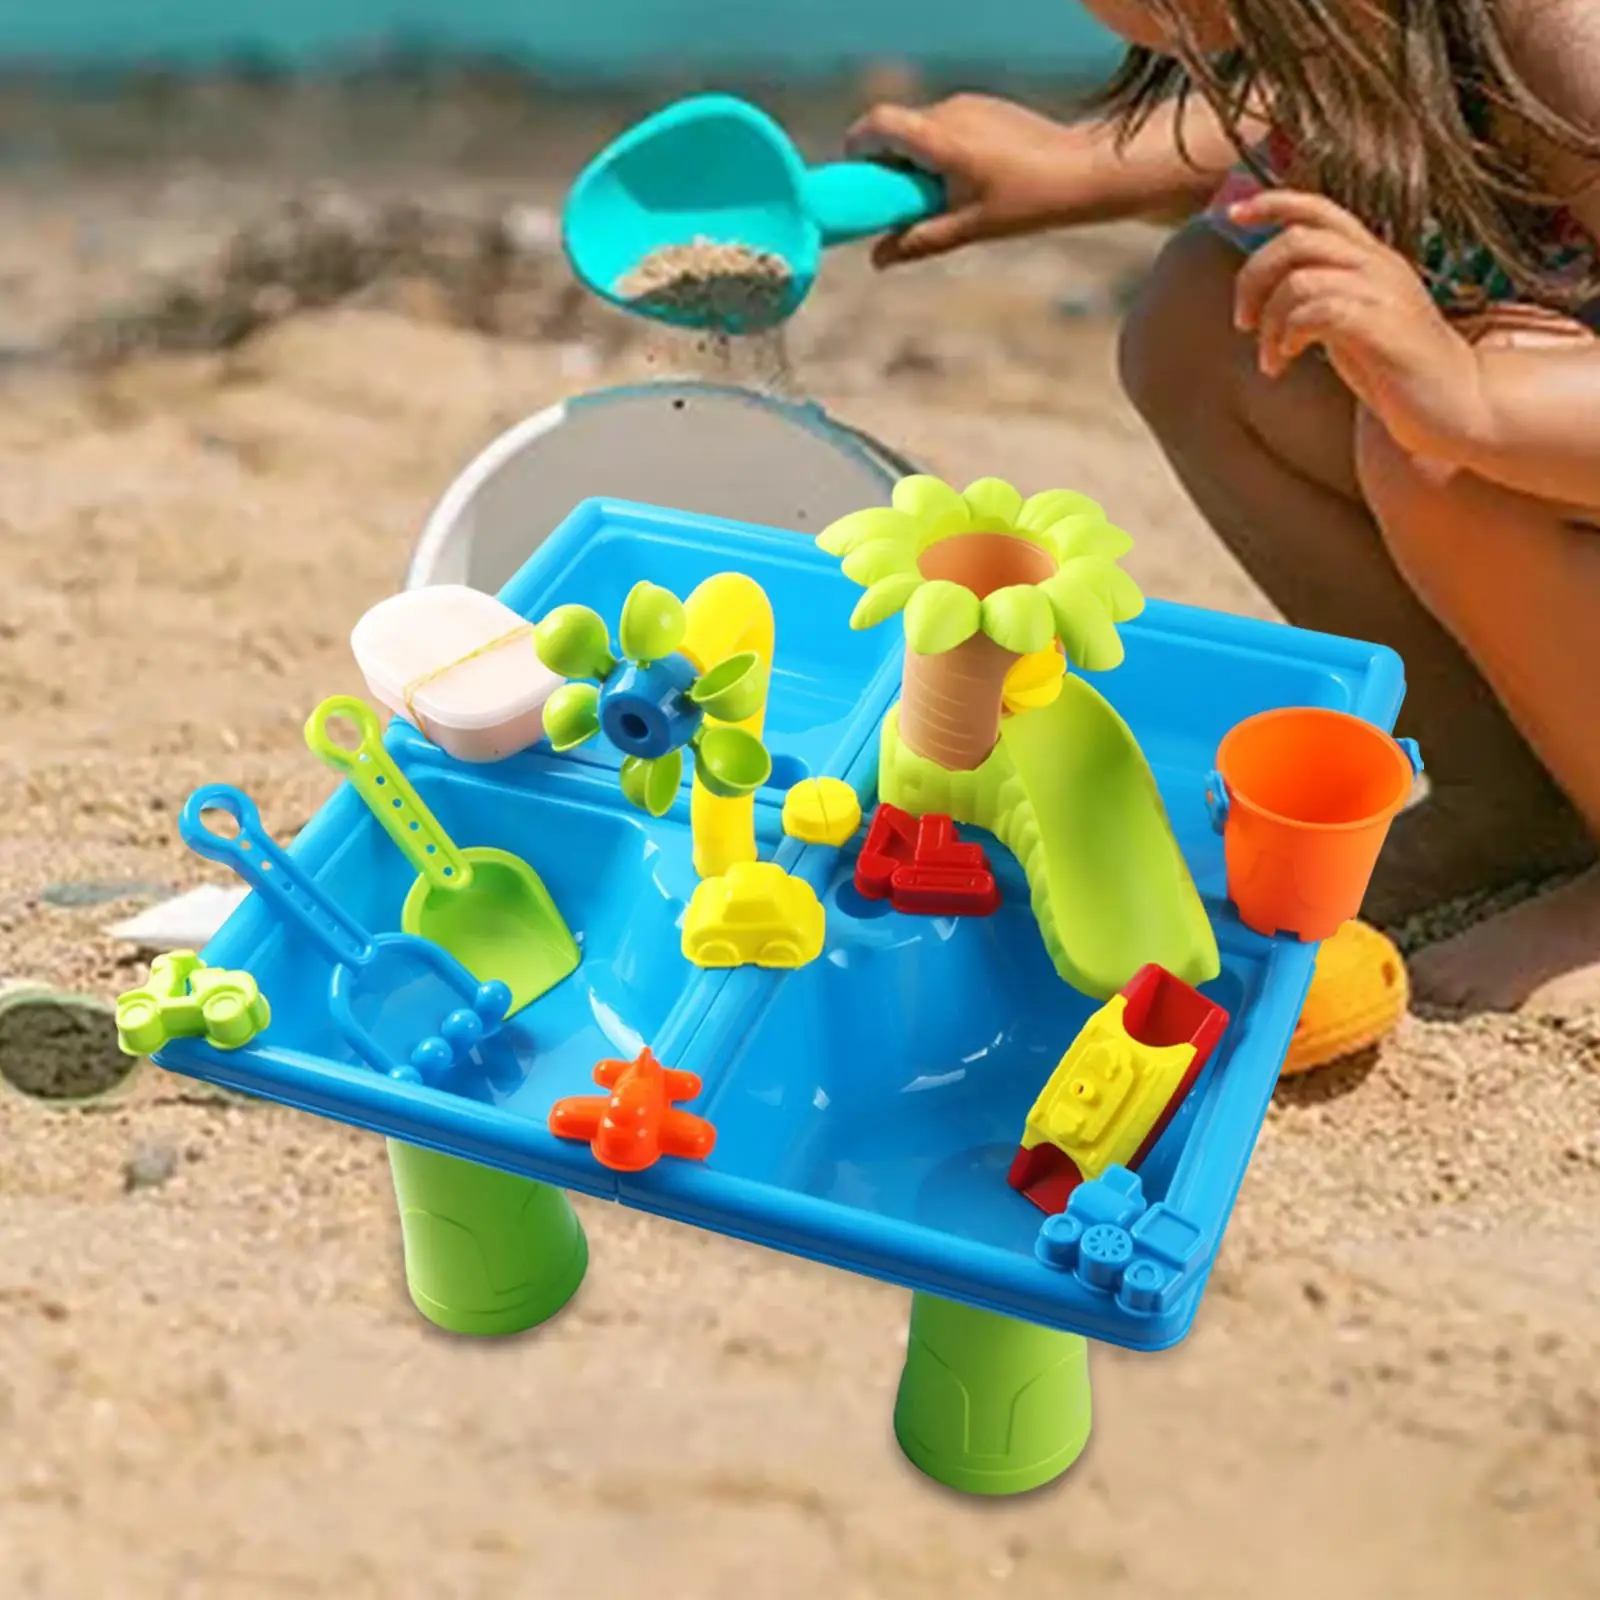 24 Pieces Summer Water Table Sensory Toys Beach Backyard Outdoor Sandbox Table Playset for Children Girls Boys Birthday Gifts